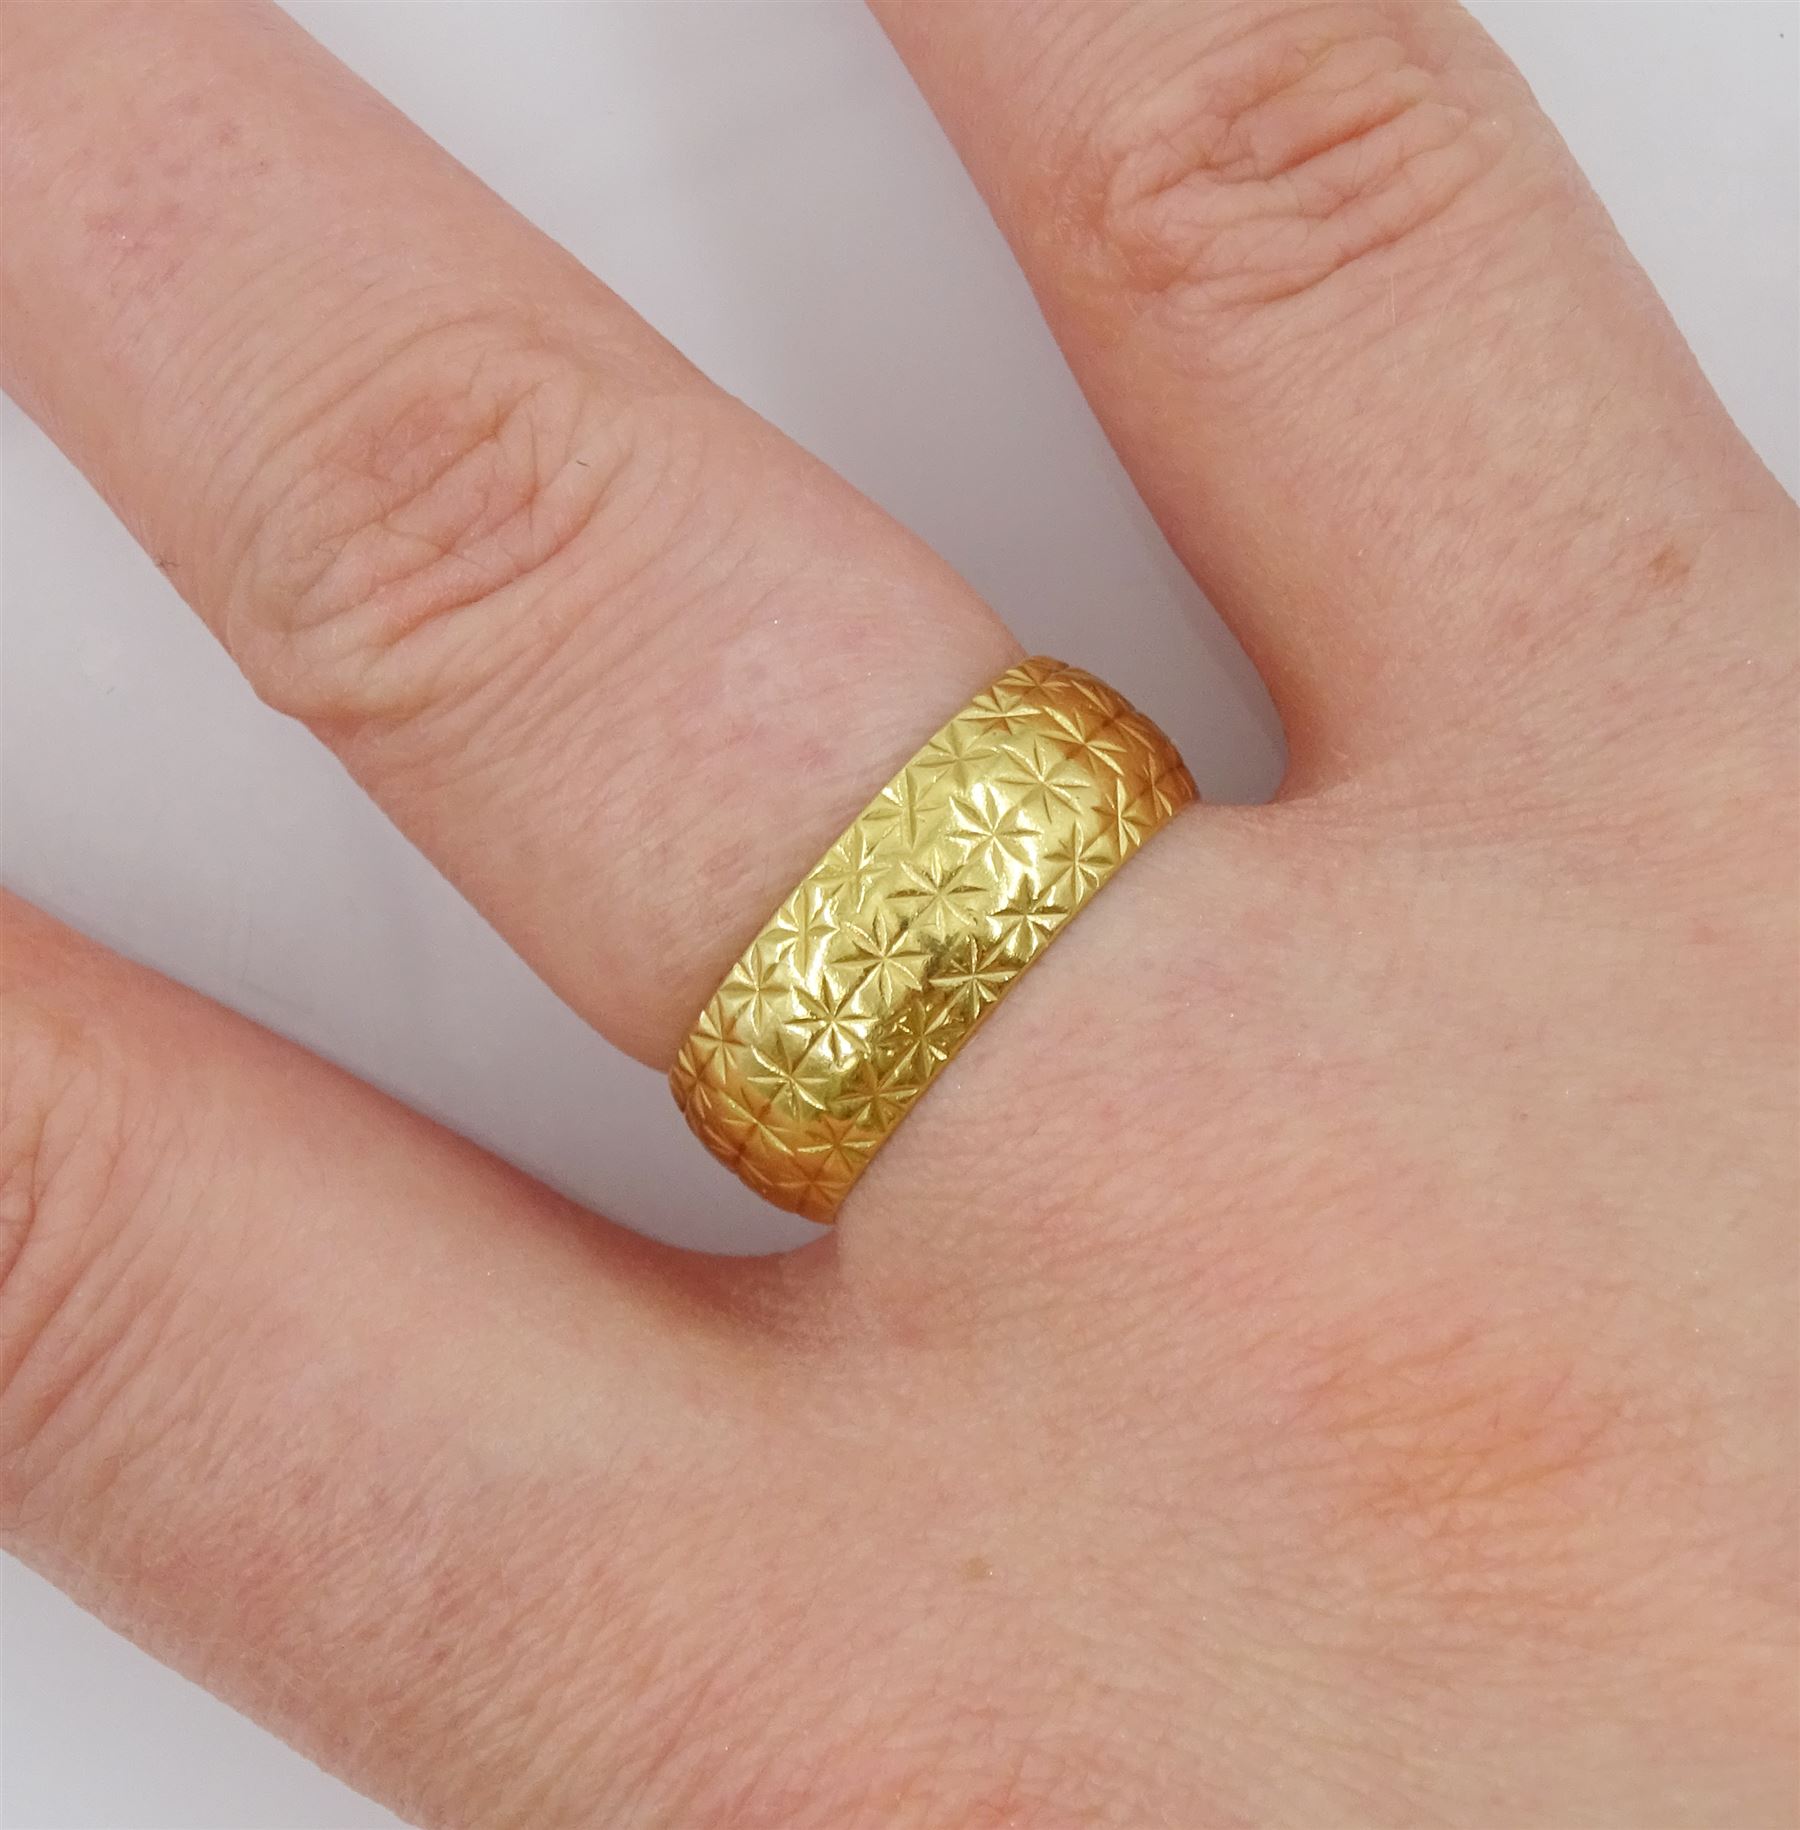 18ct gold wedding ring - Image 2 of 3